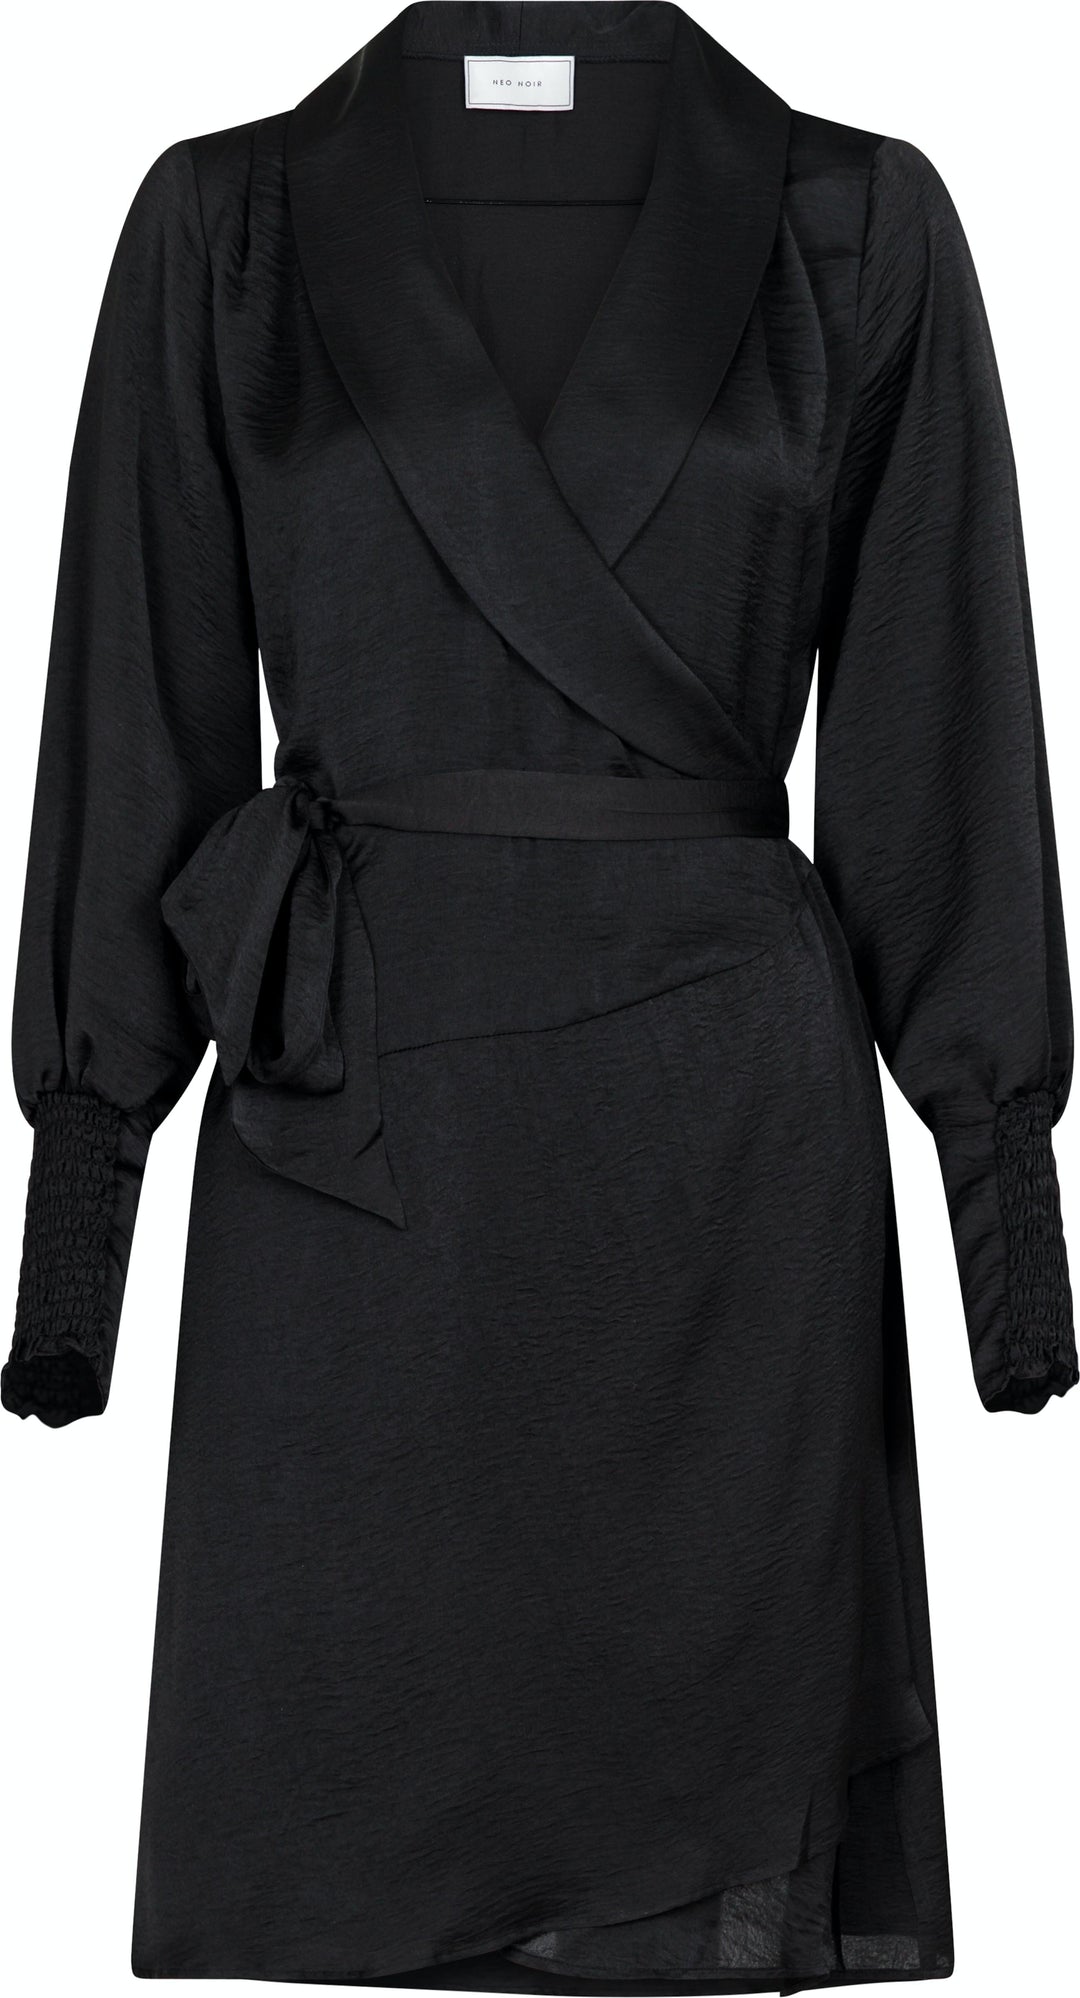 Neo Noir - Chanelle Dress - Black